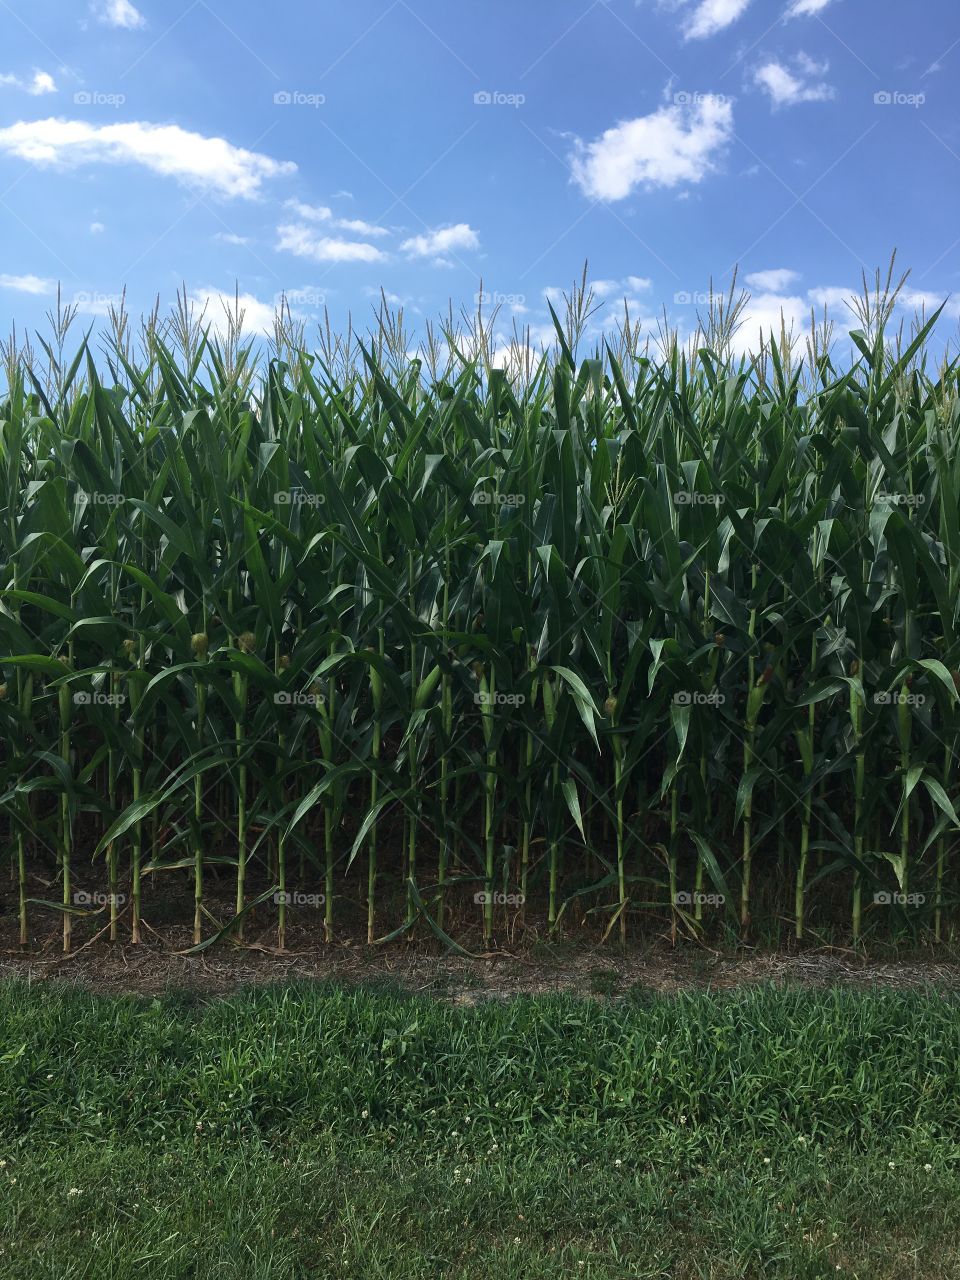 The cornfield 